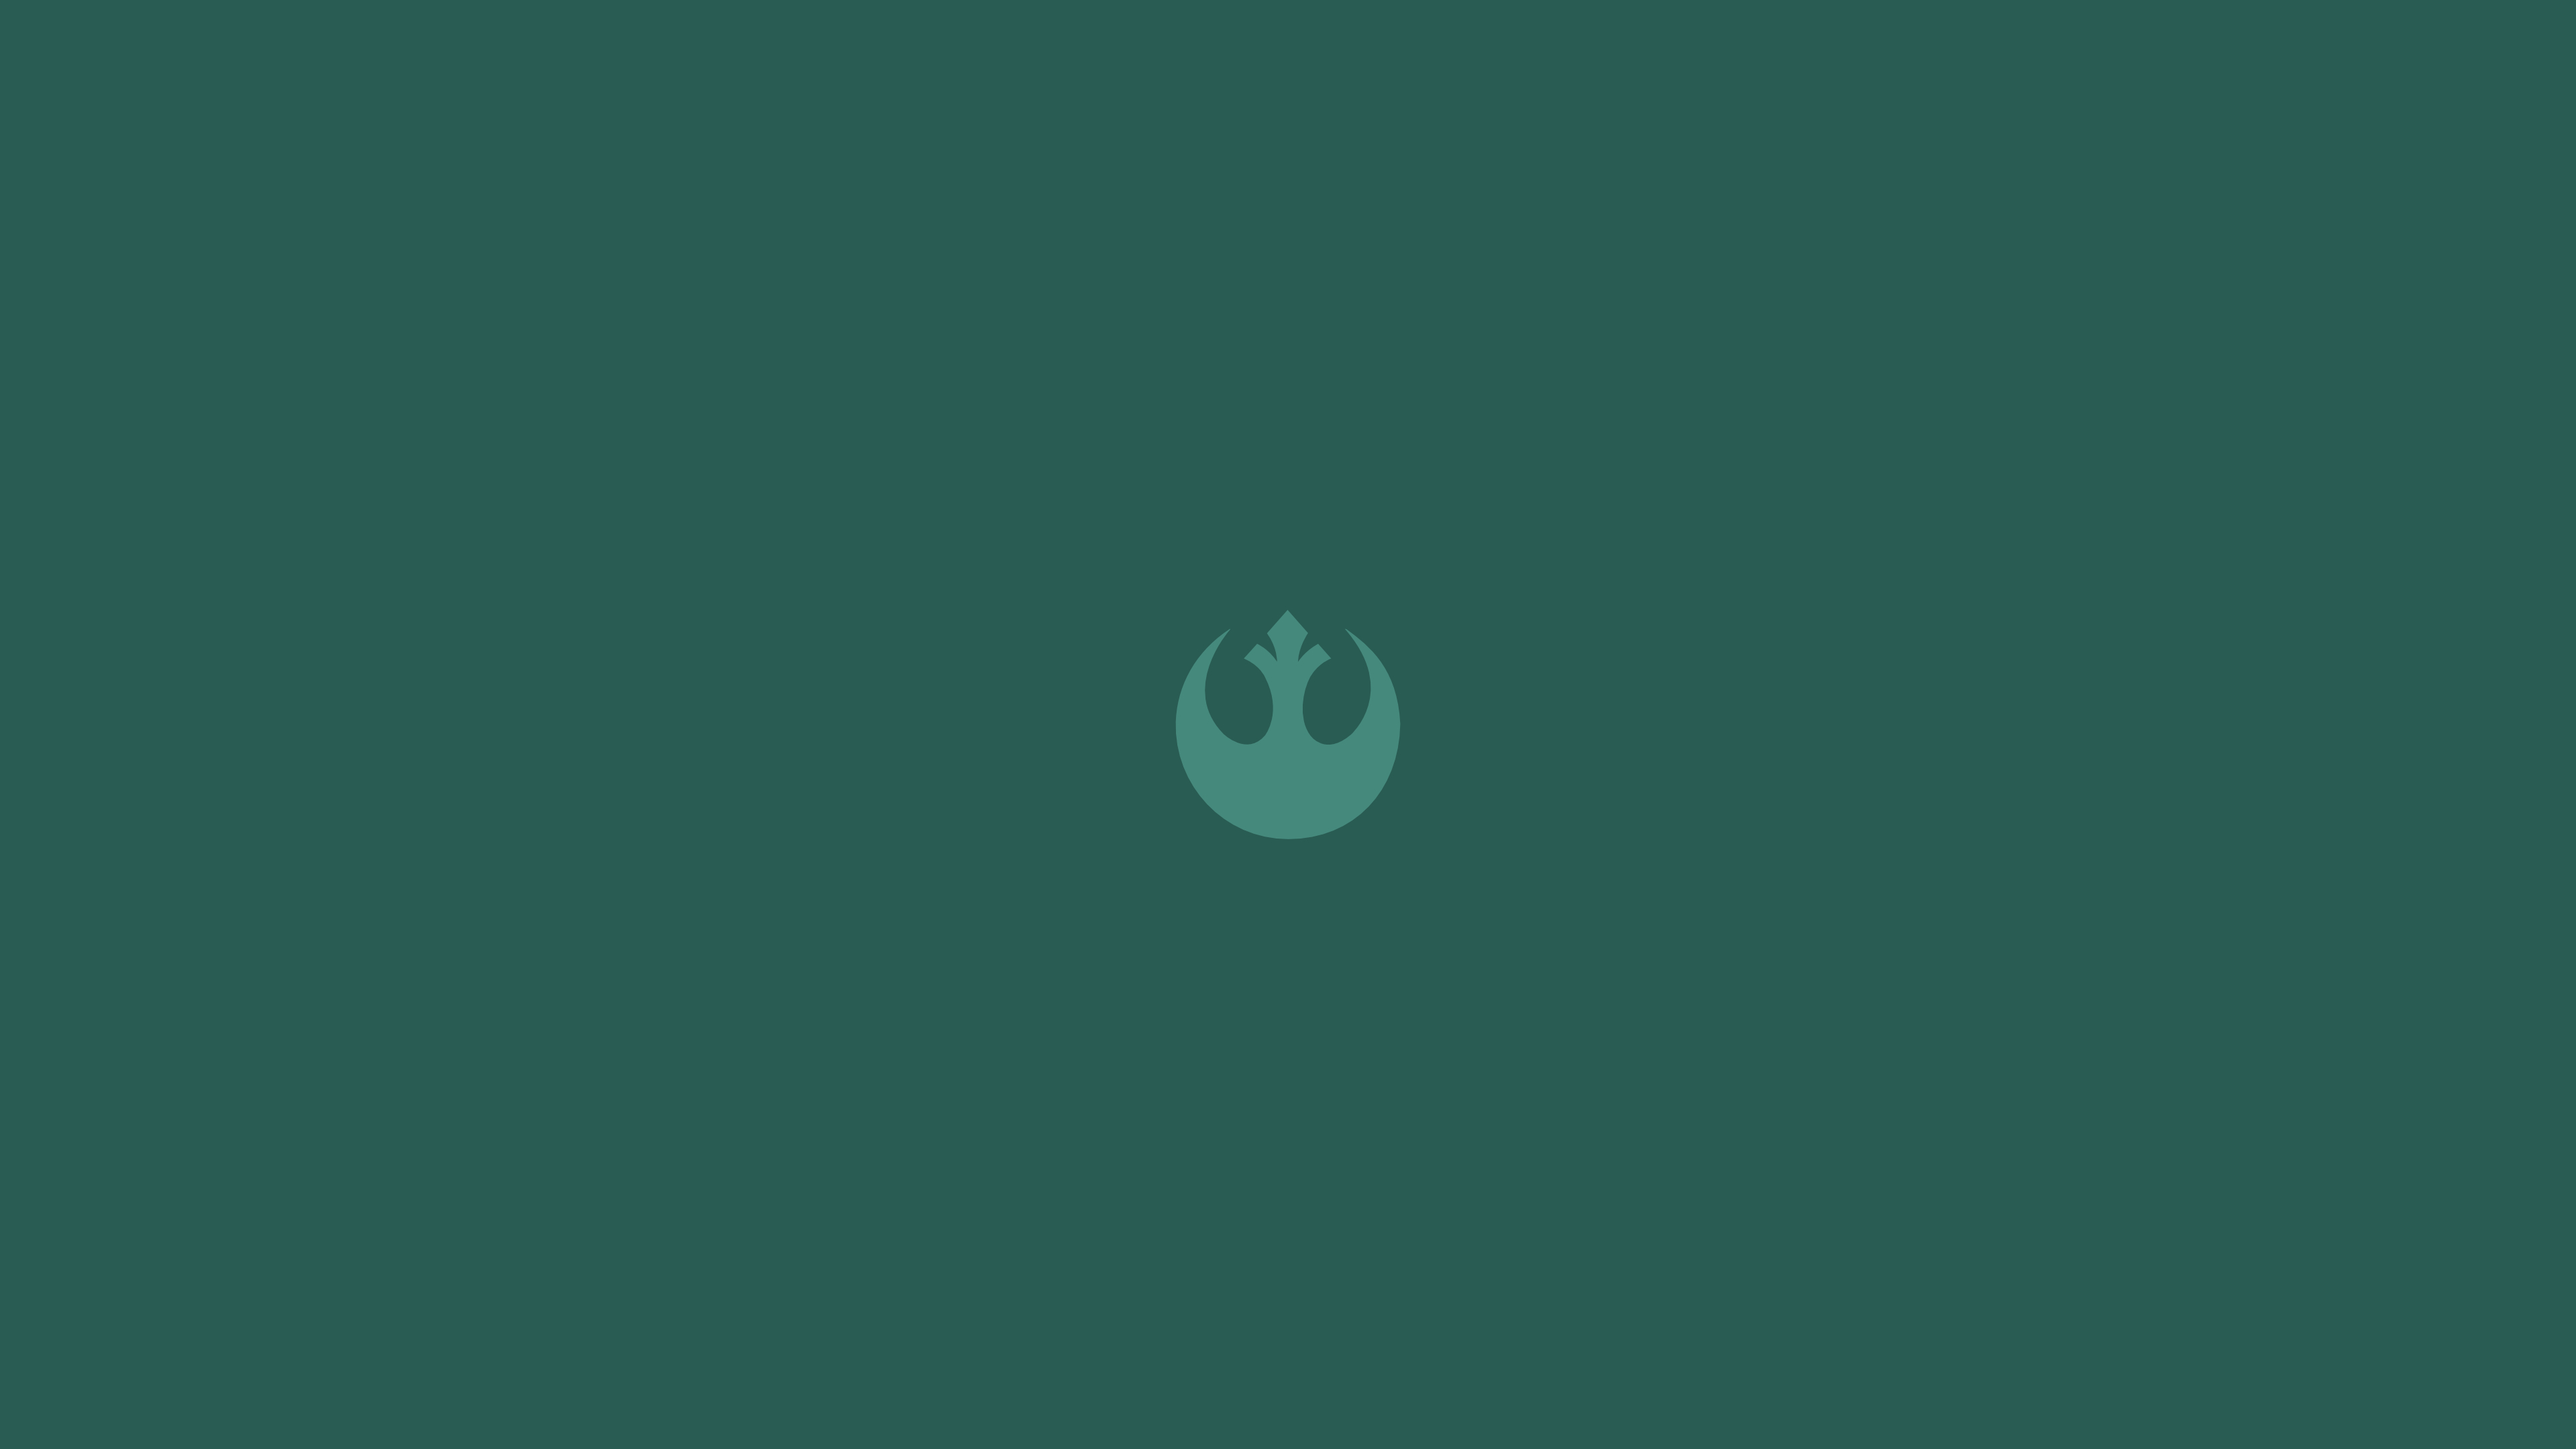 3840x2160 Wallpaper : Star Wars, Rebel Alliance, minimalism eulers7bitches 1826817 HD Wallpapers